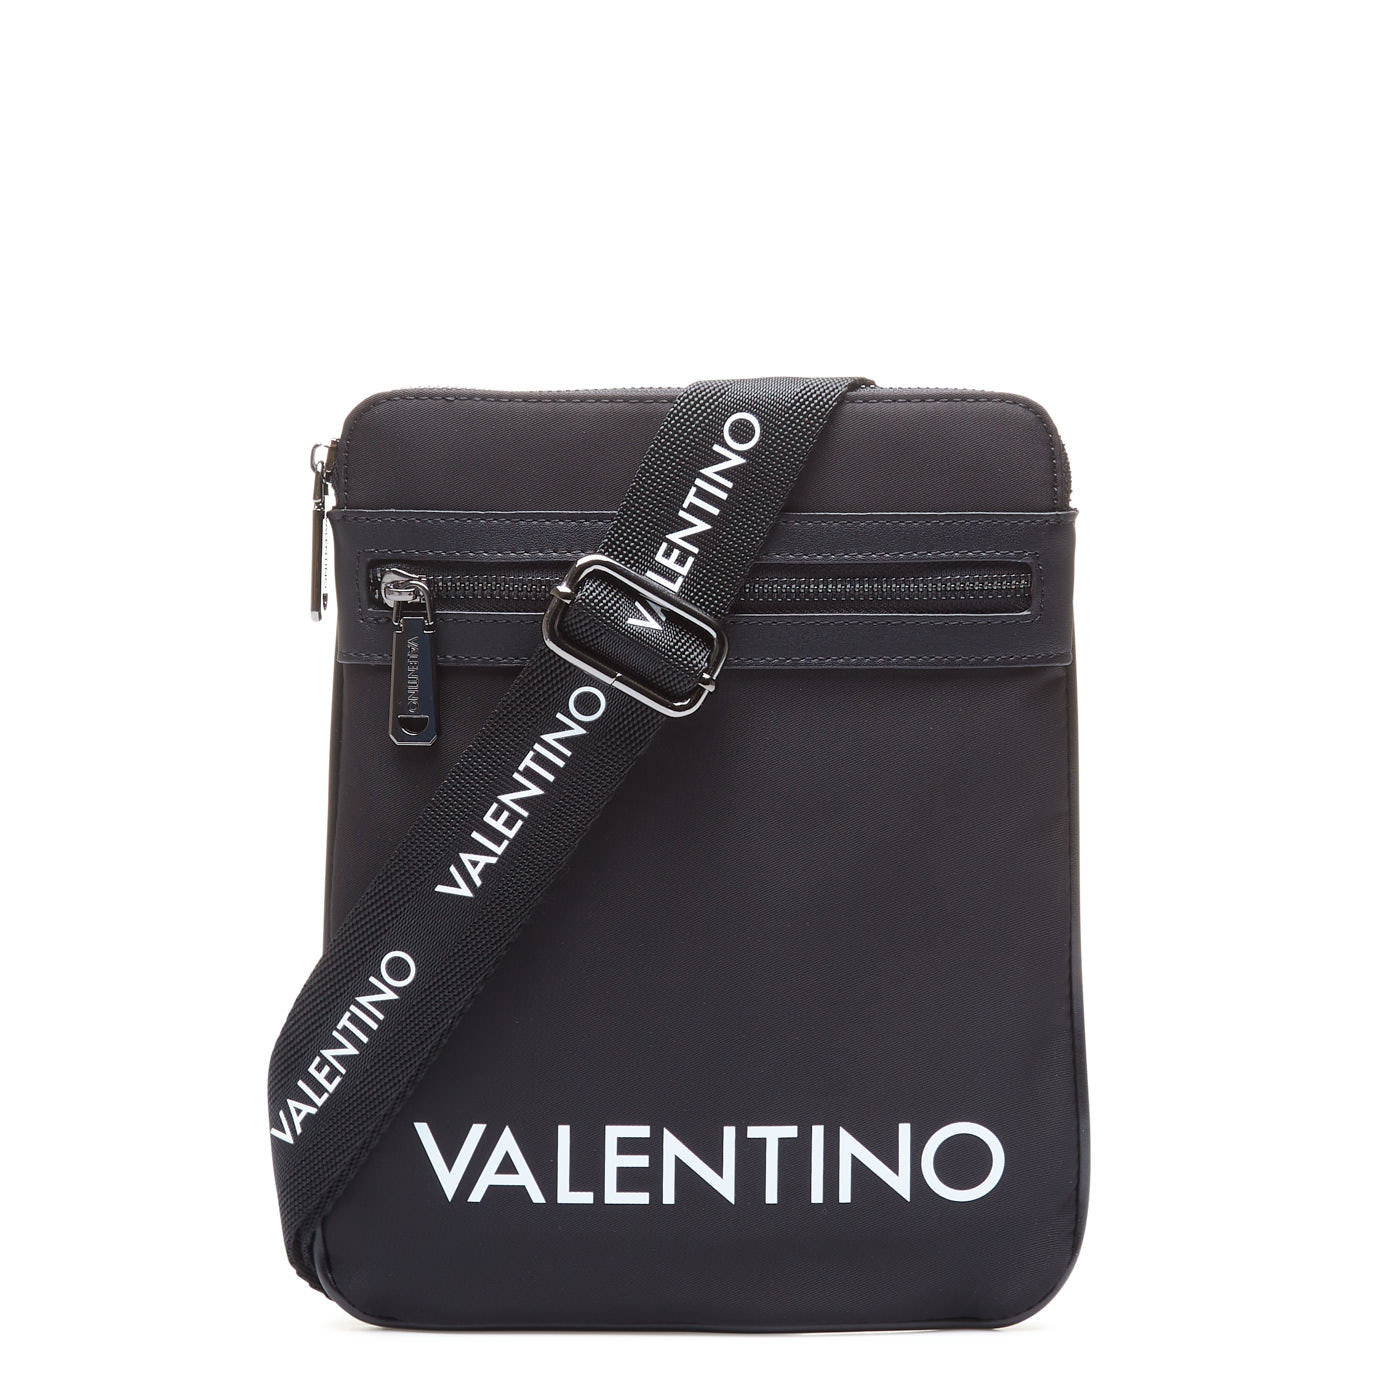 Valentino Valentino men crossbody bag in black faux leather 1985BGEA6R905N,  black men bag black bag men black valentino bag - 1985bgea6r905n - Sacs  Valentino - Homme Valentino